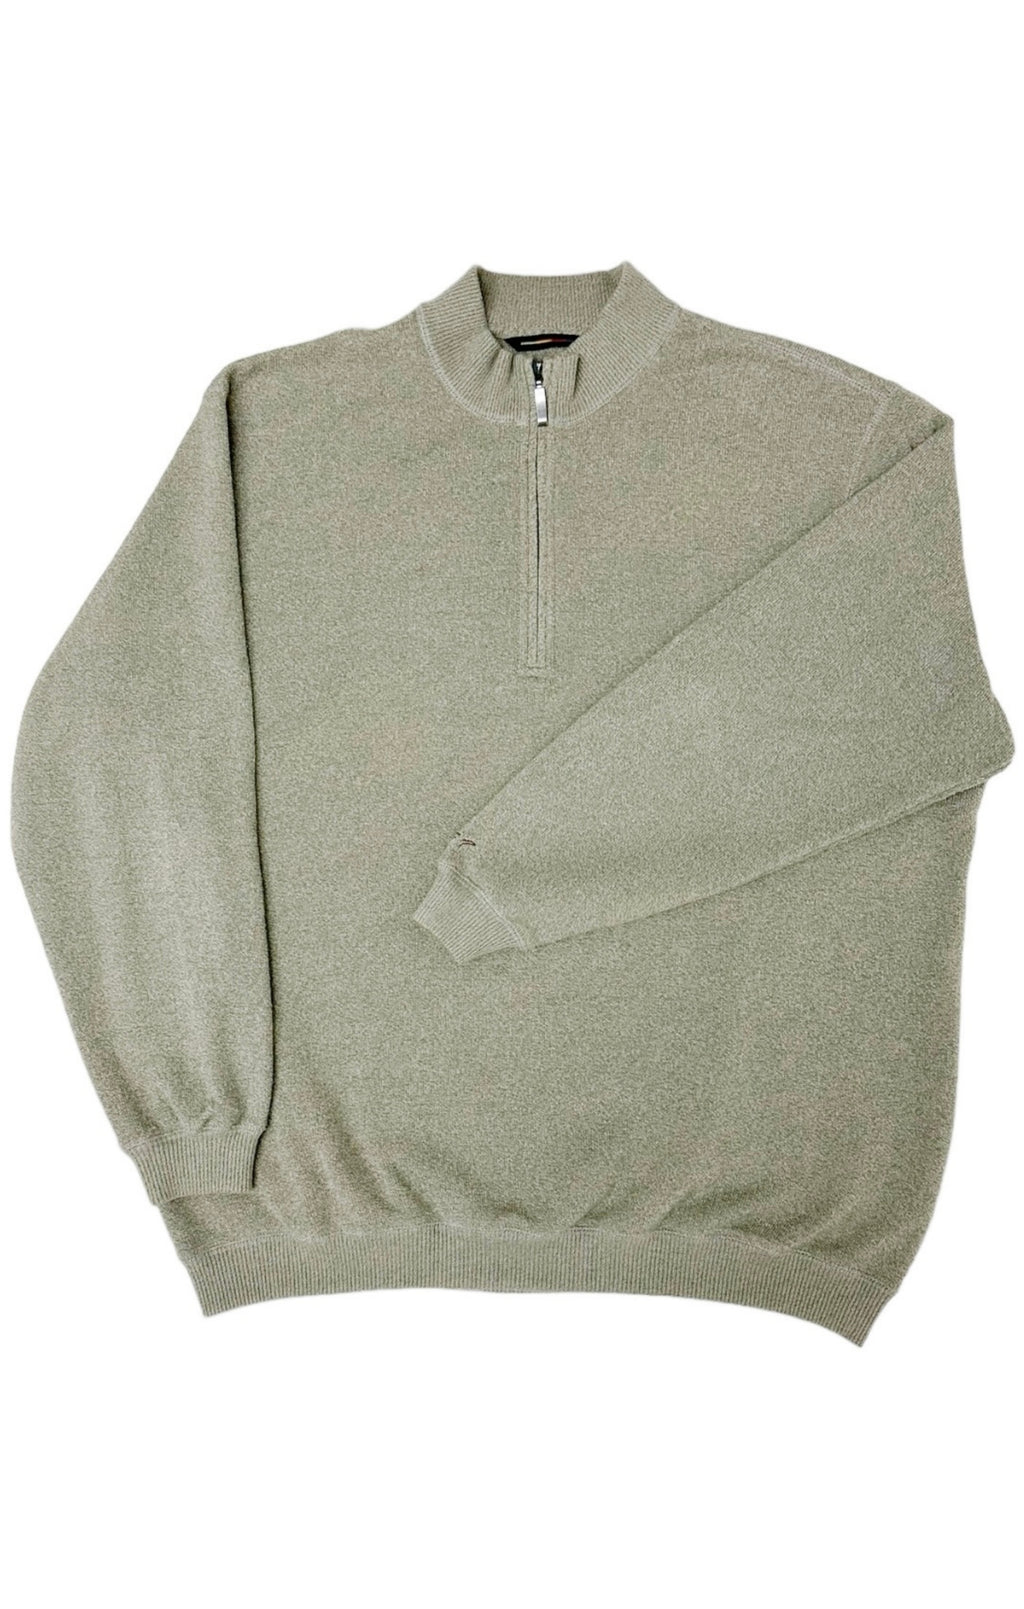 GREG NORMAN Sweater Size: XL